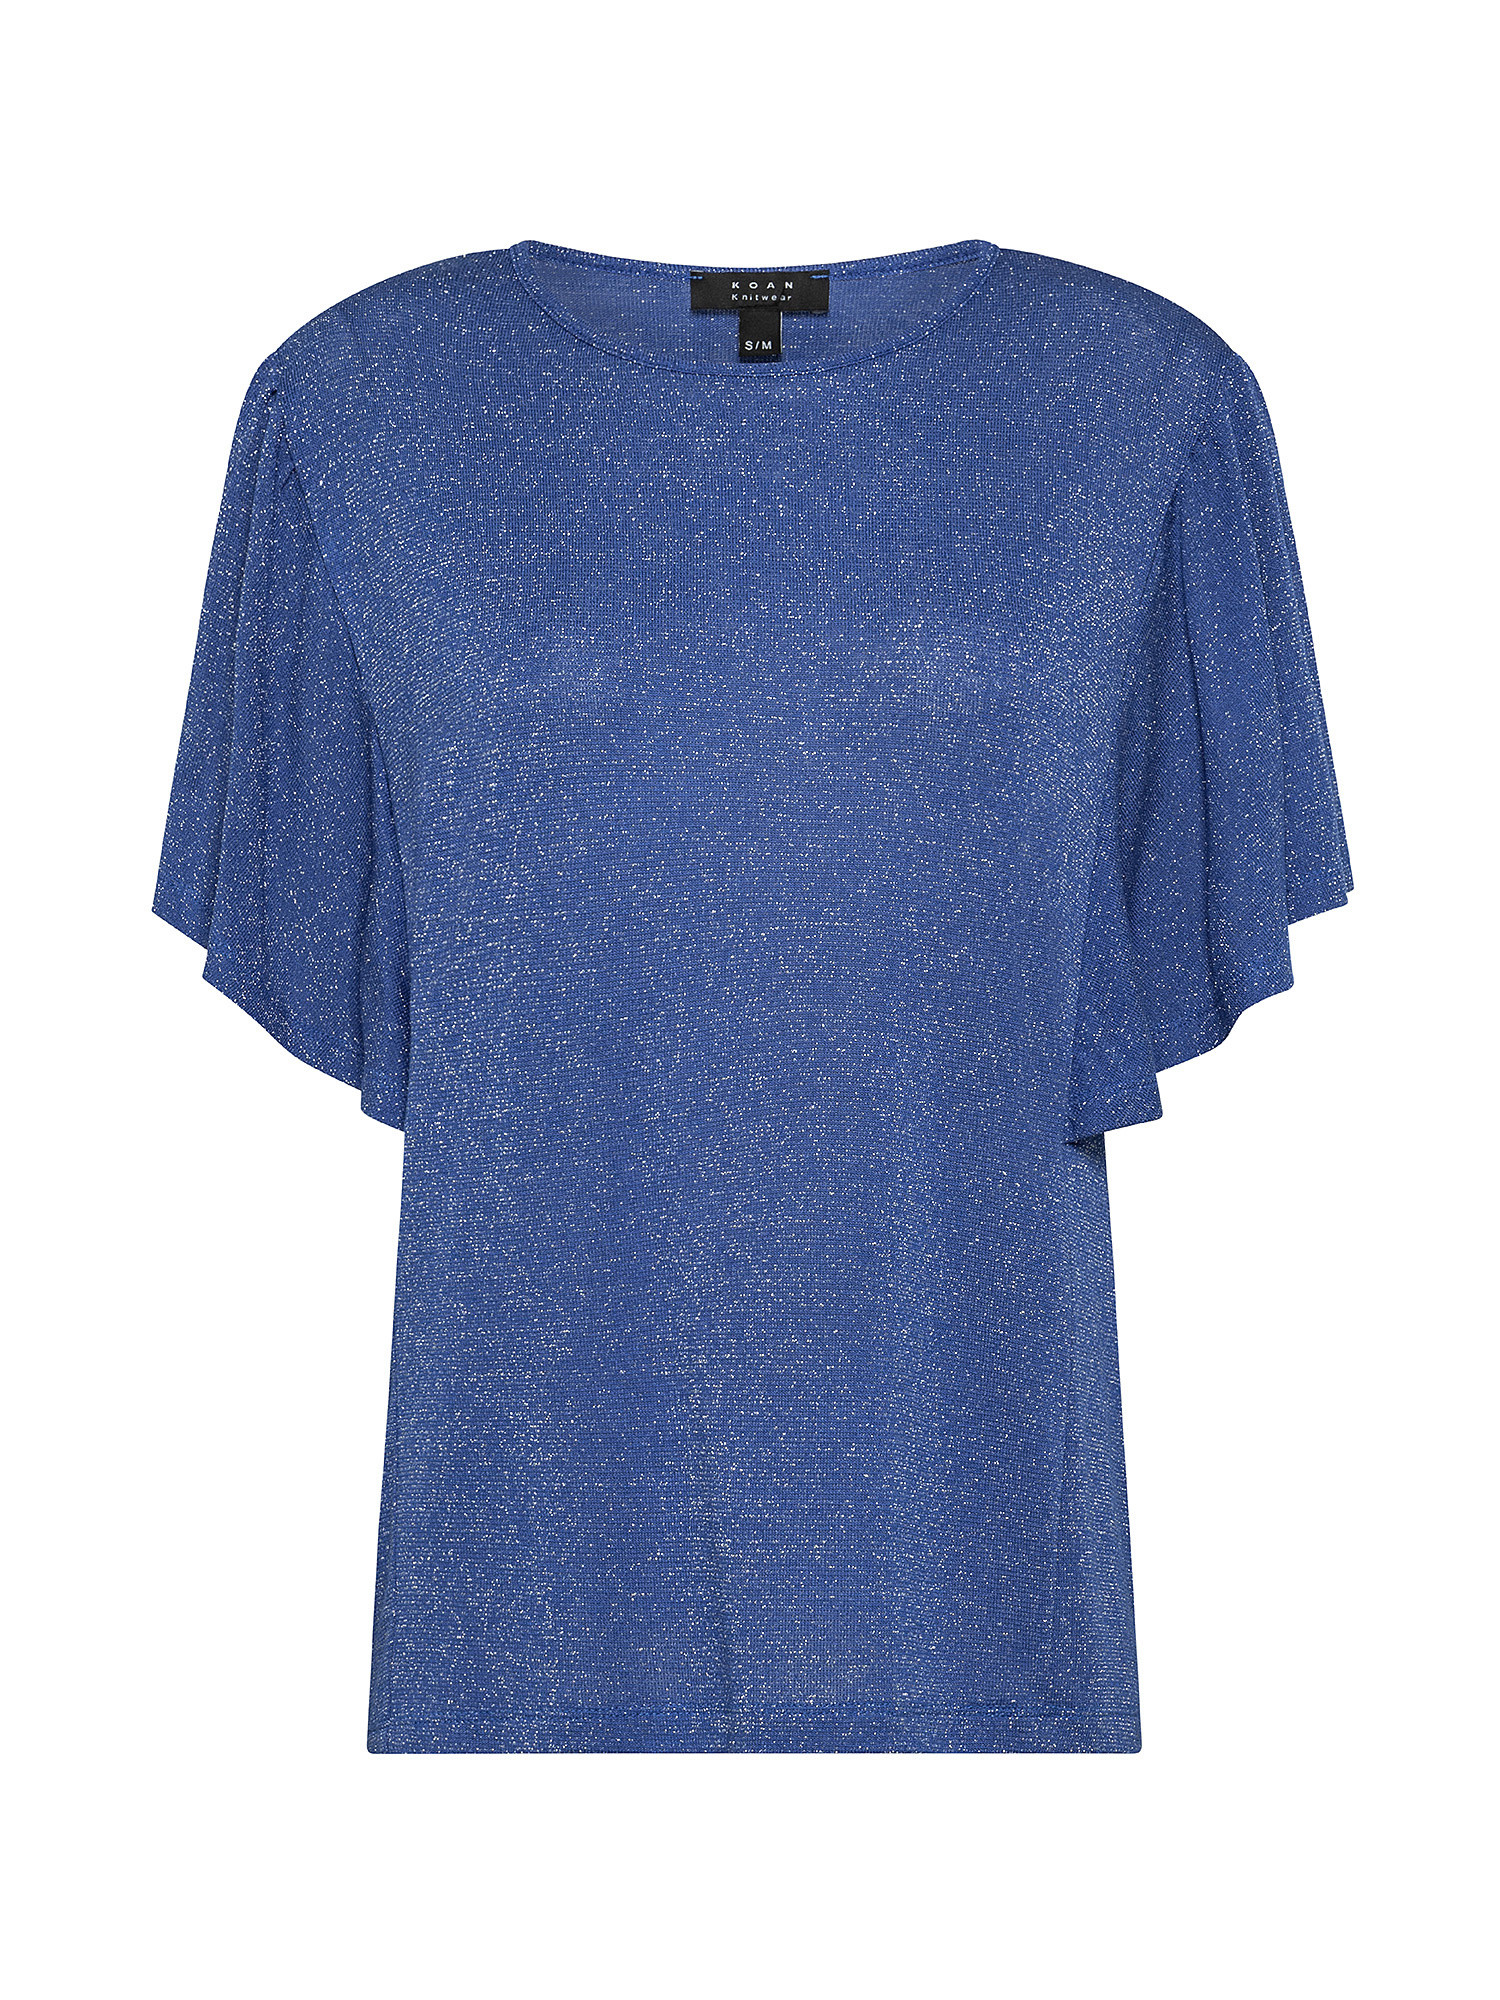 Bat sleeve T-shirt, Royal Blue, large image number 0